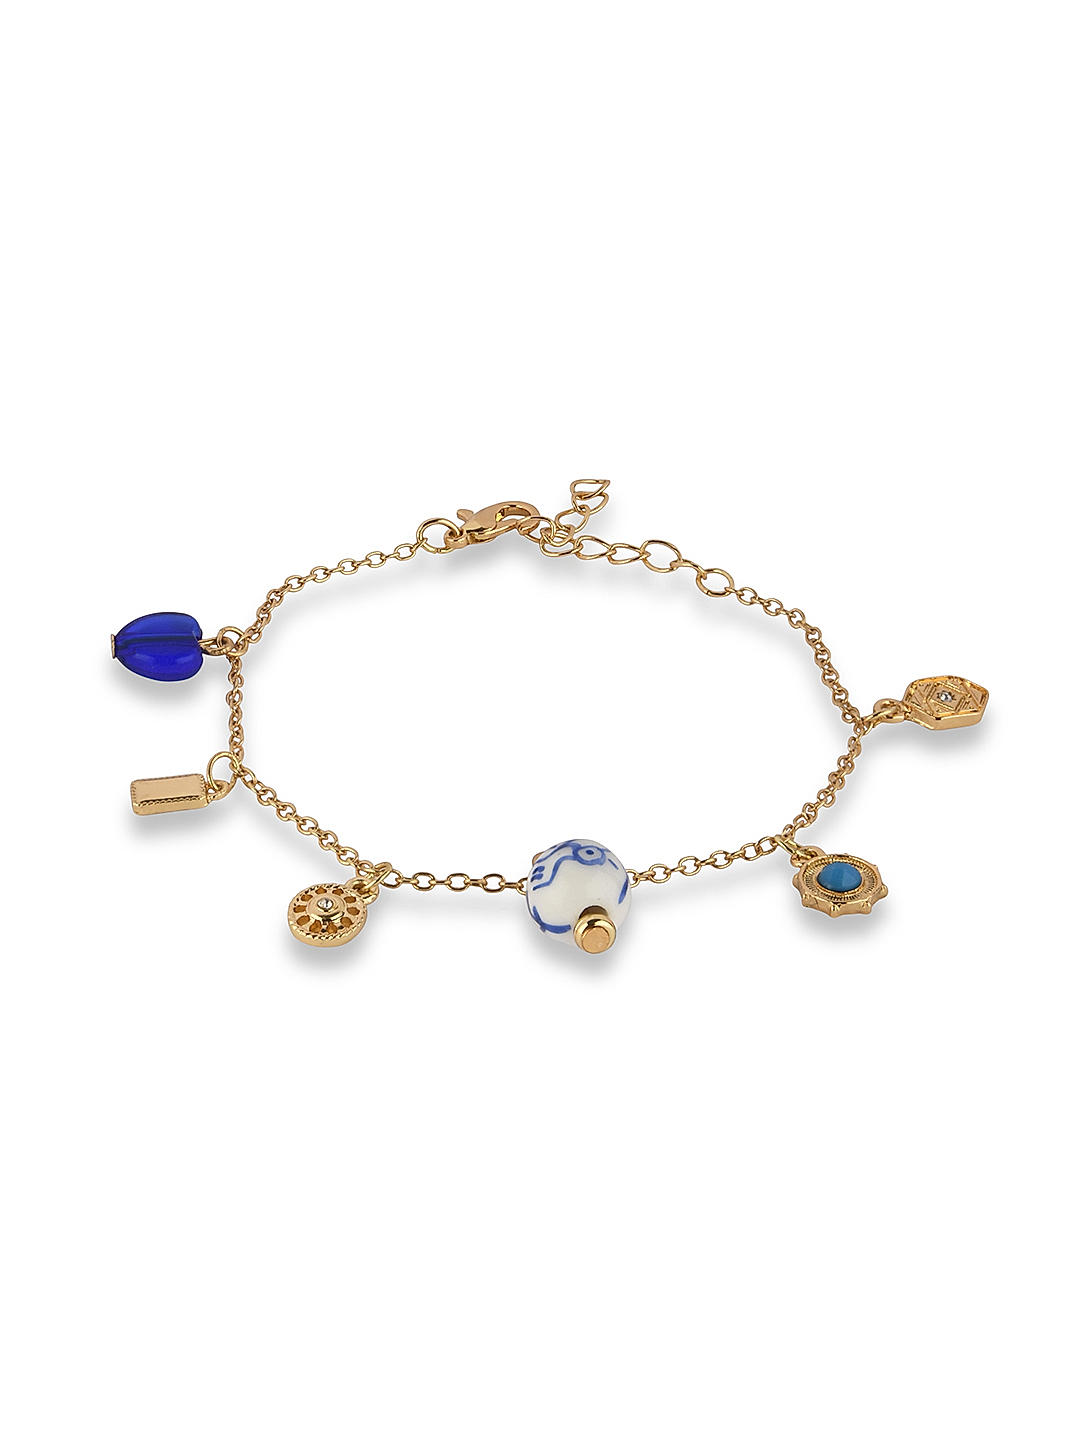 Buy Youbella Gold Plated Charm Bracelet For Women Online